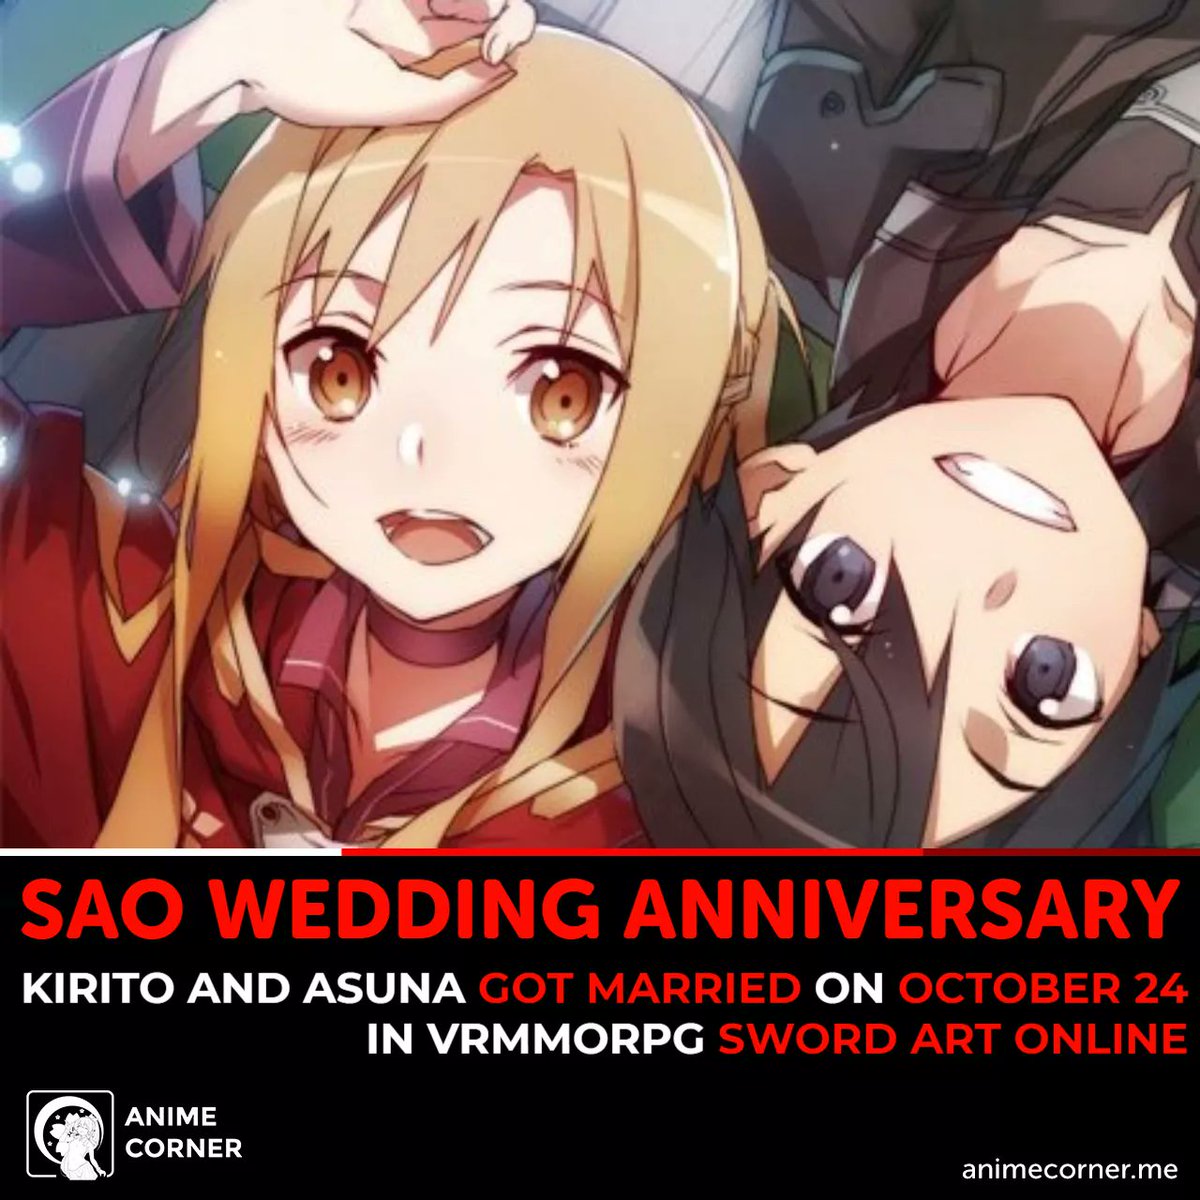 Anime Corner News - On this day 10 years ago, Sword Art Online